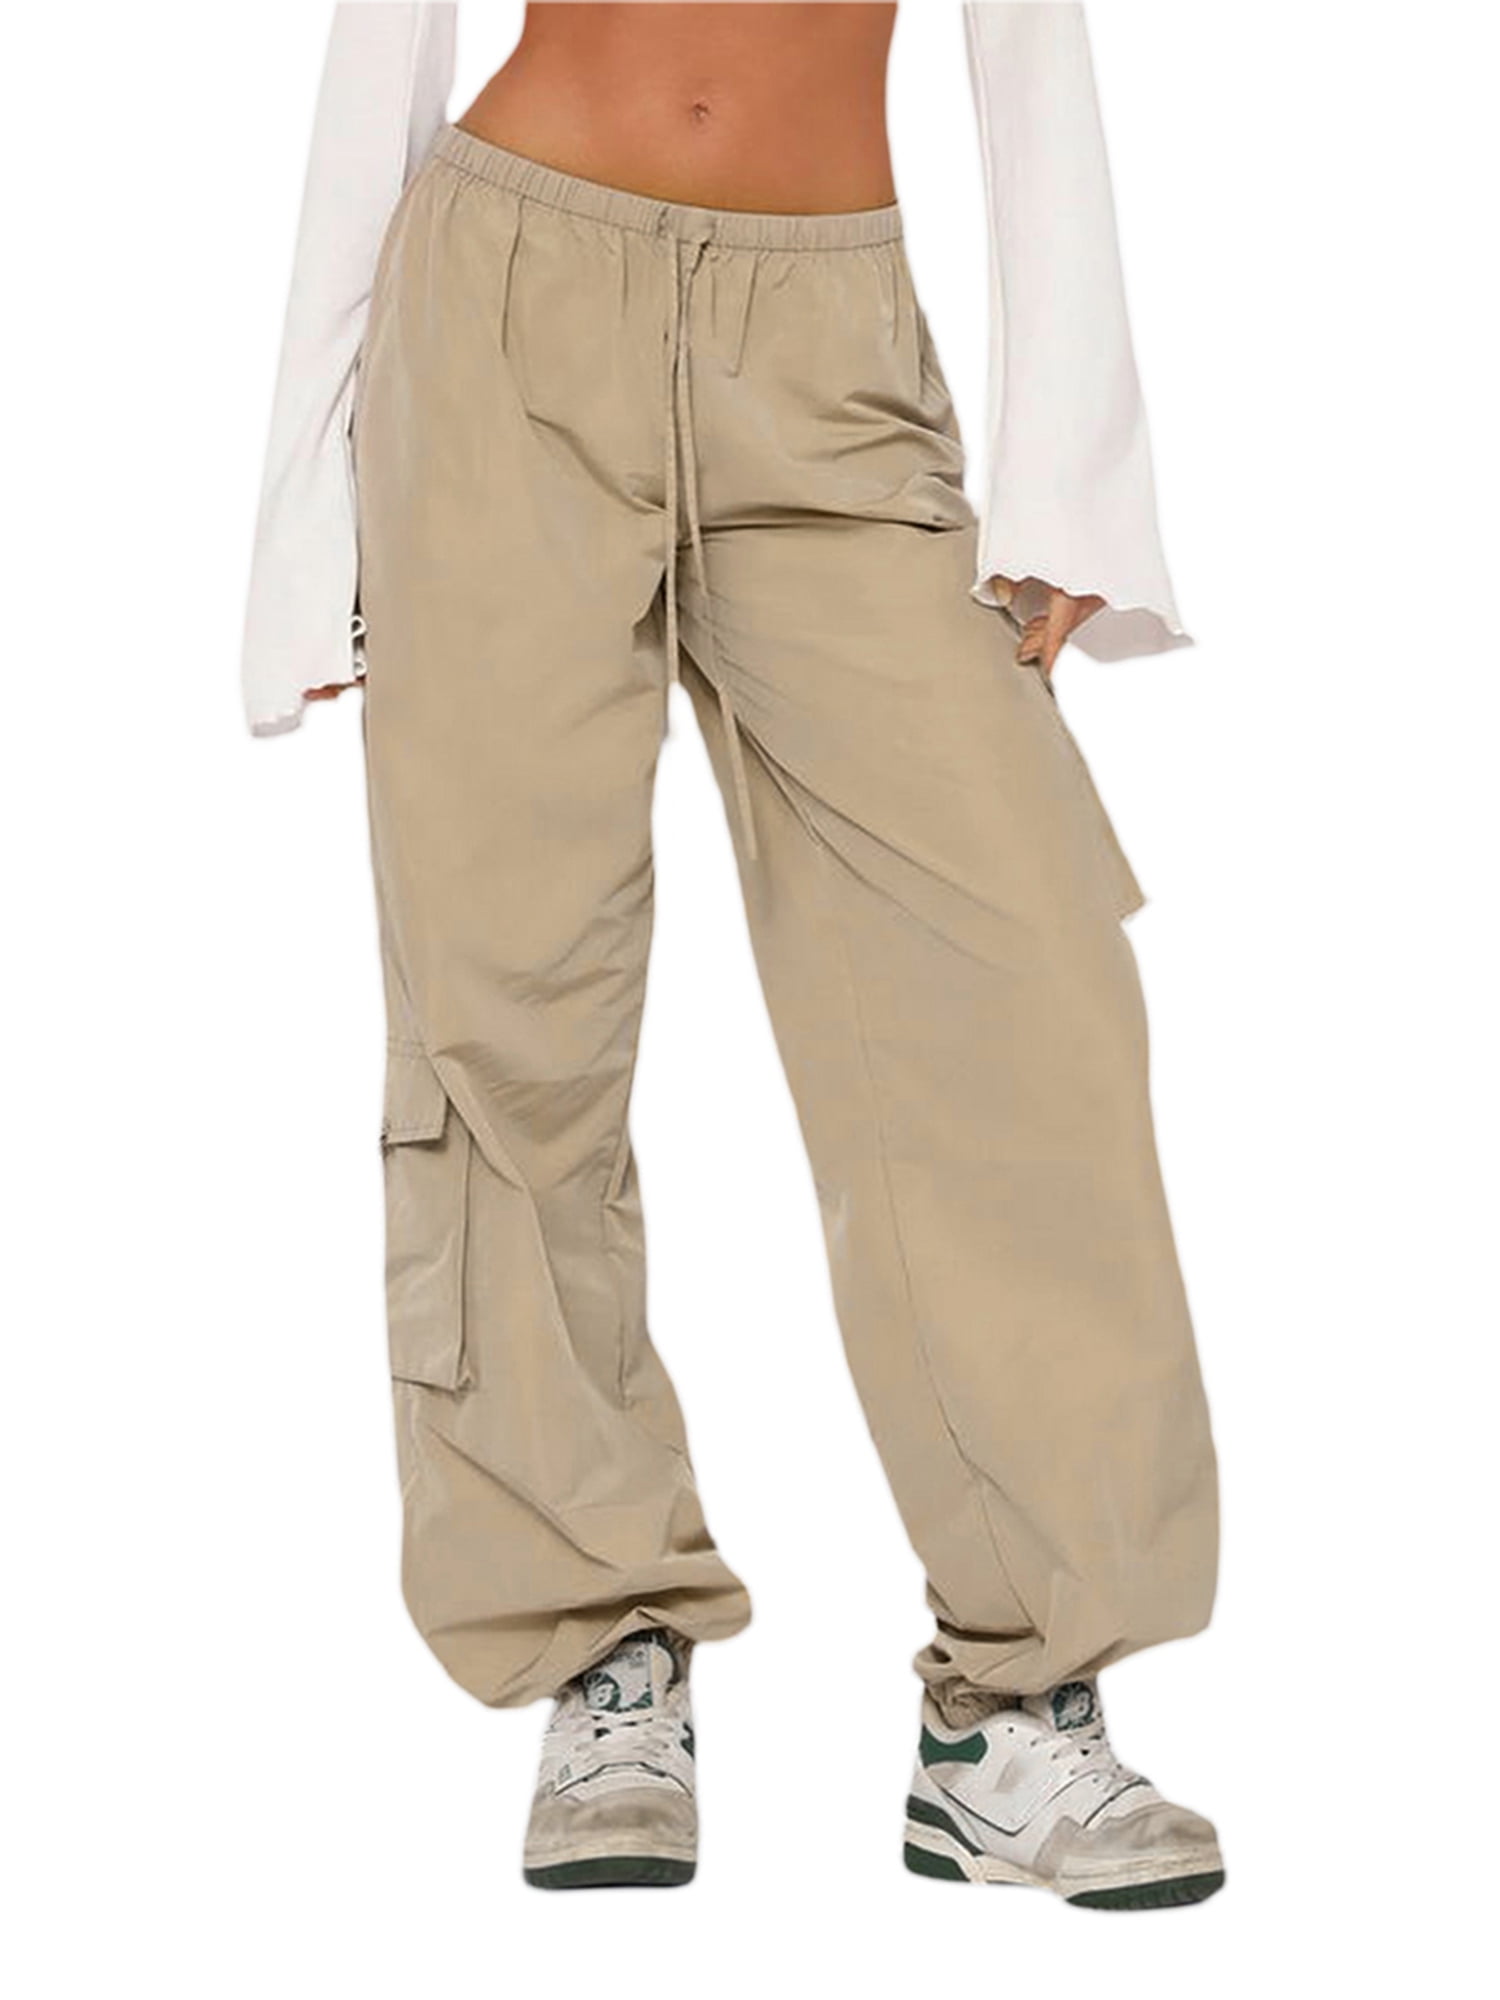 Women's Adjustable Drawstring Elastic Waist Baggy Cargo Pants Multi ...